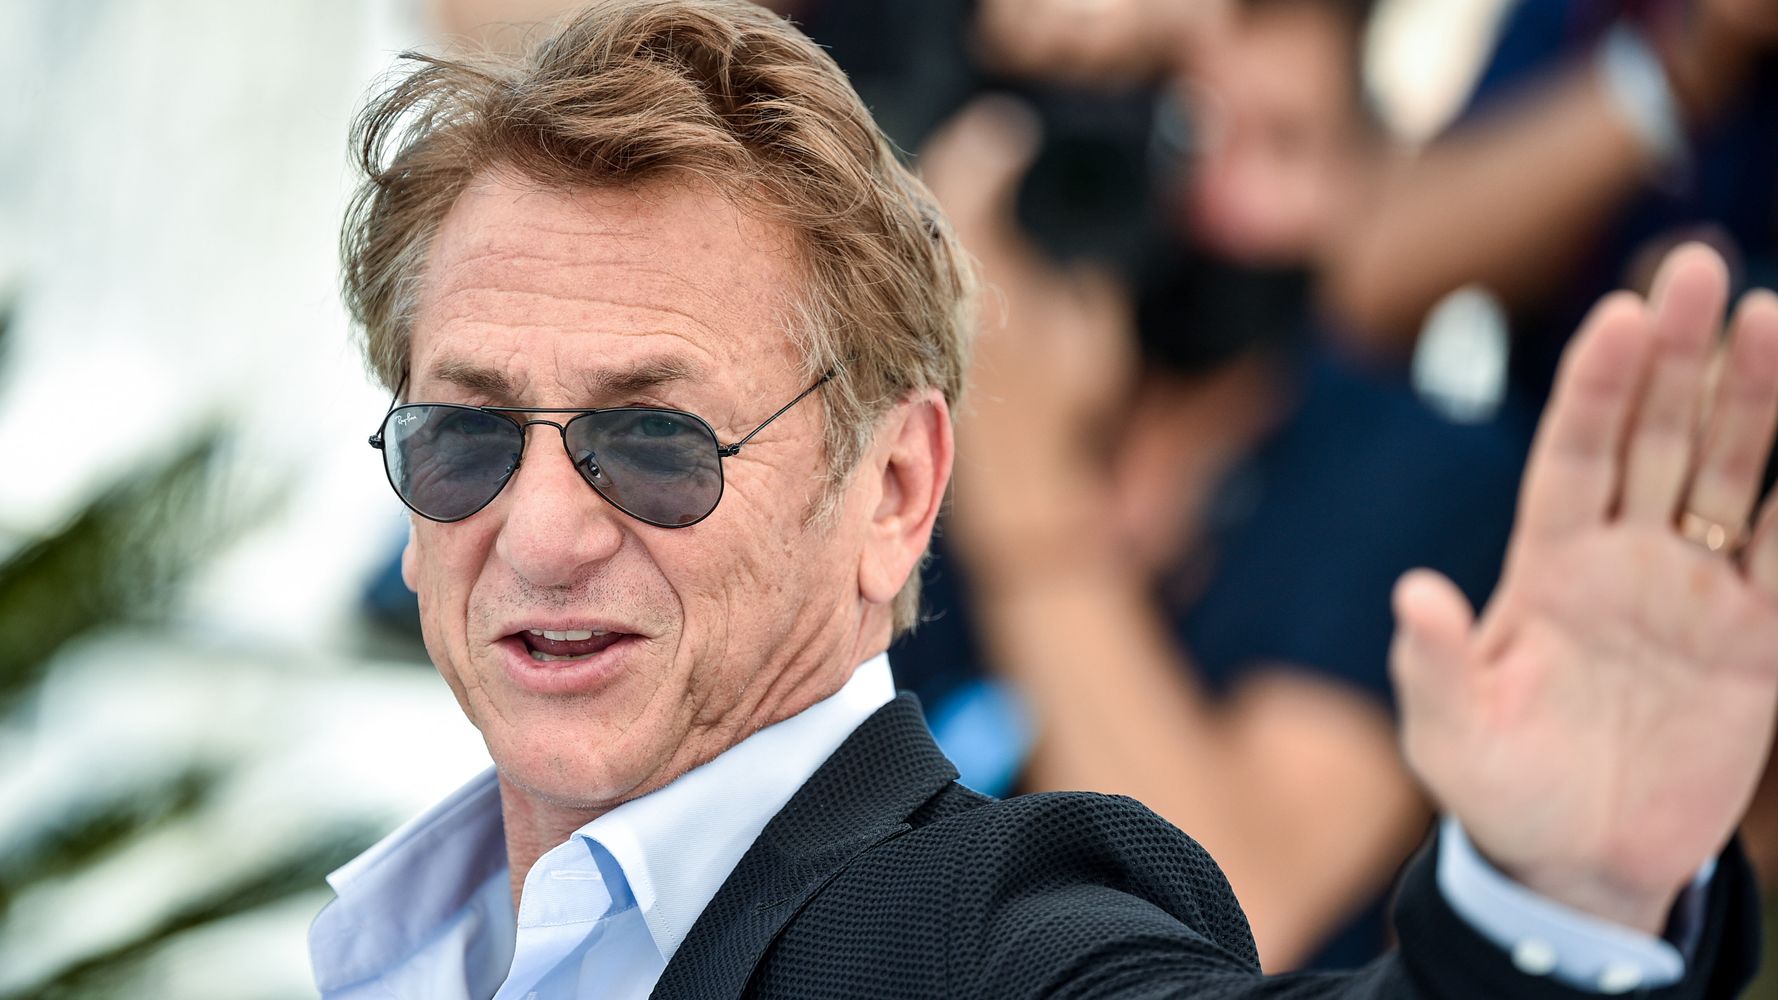 Sean Penn Trashes Donald Trump's COVID-19 Response At Cannes Film Festival